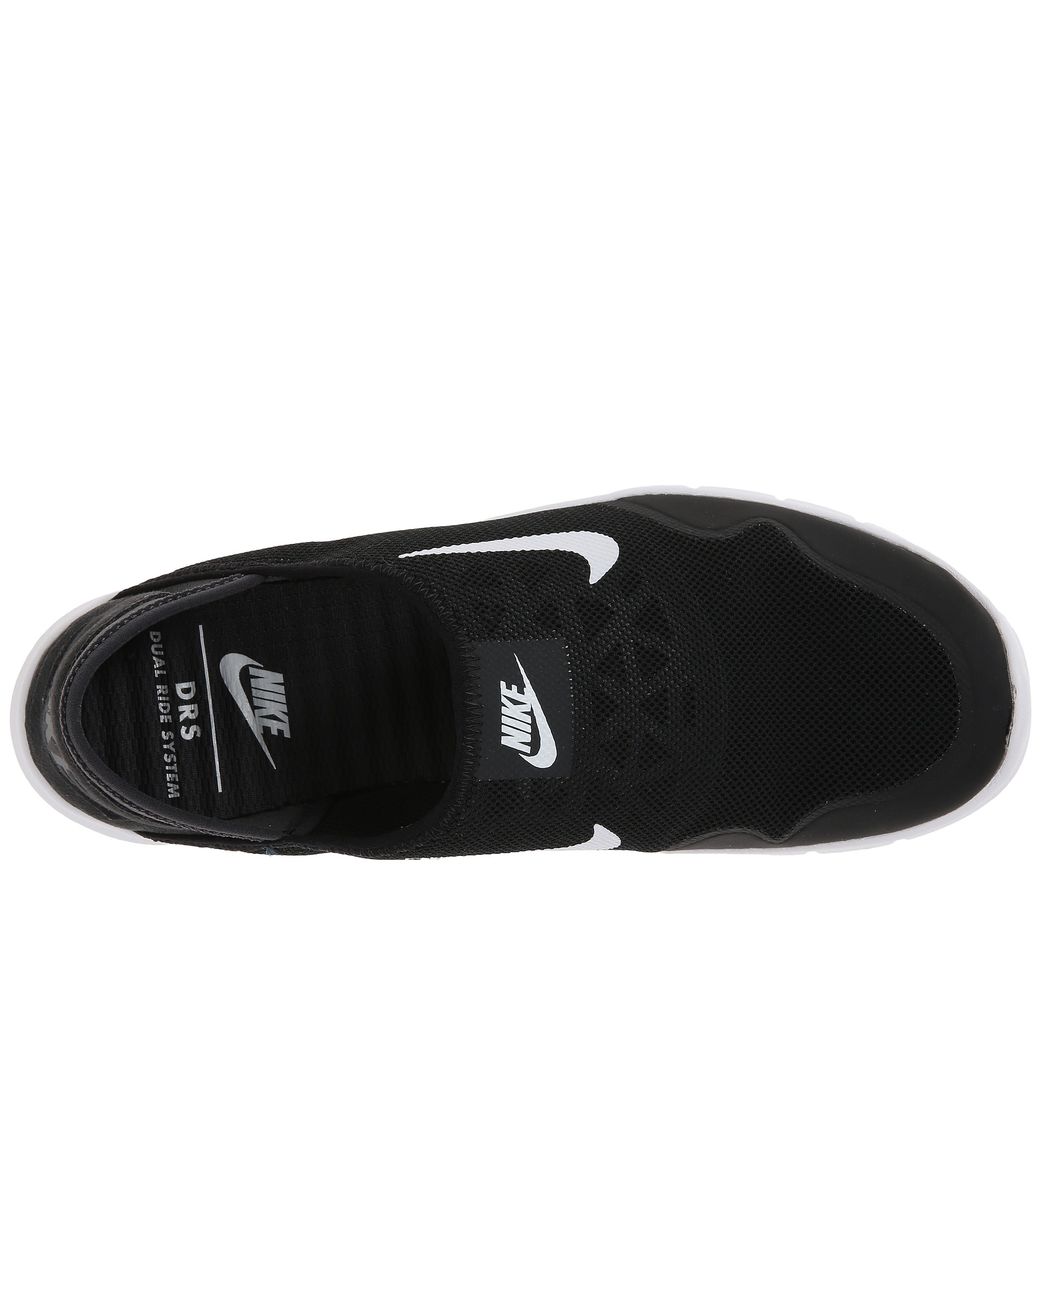 Nike Synthetic Orive Lite Slip-on in Black/White (Black) | Lyst